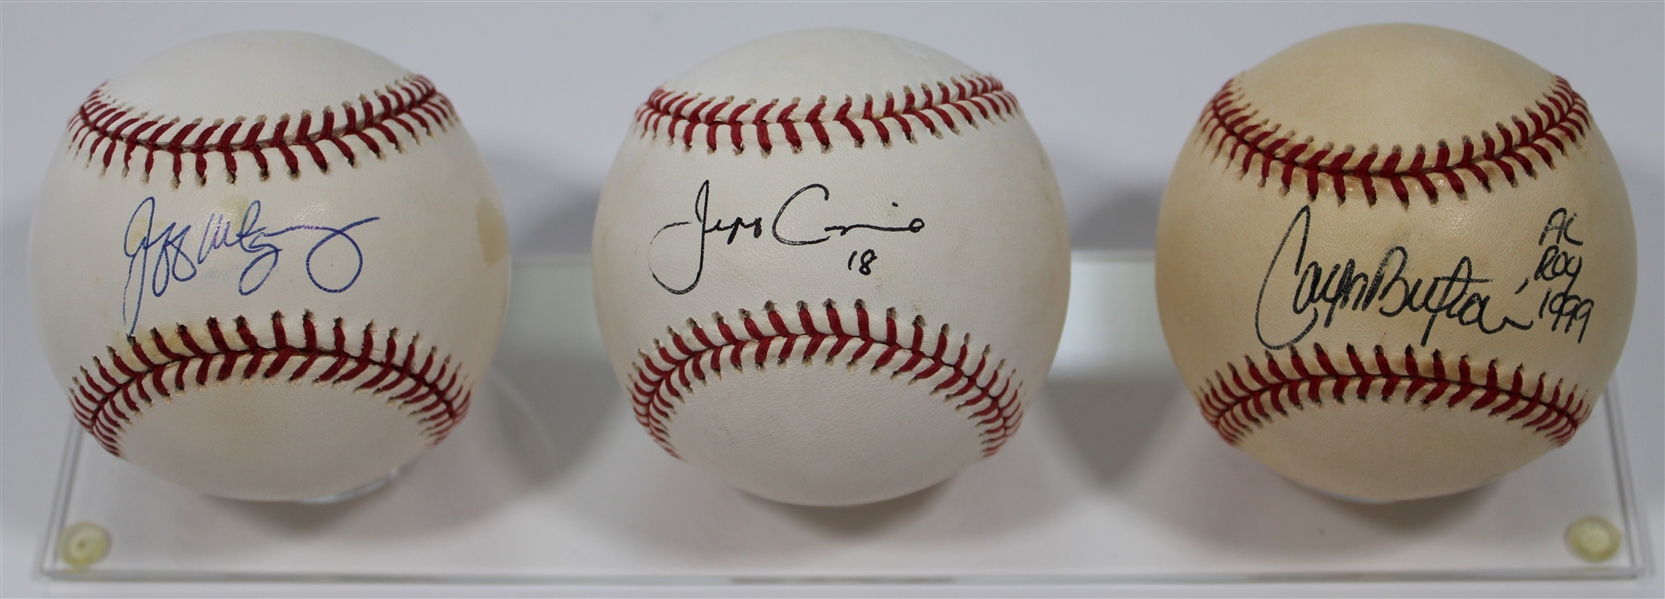 Jeff Conine-Jeff Montgomery-Carlos Beltran ROY Signed Baseballs